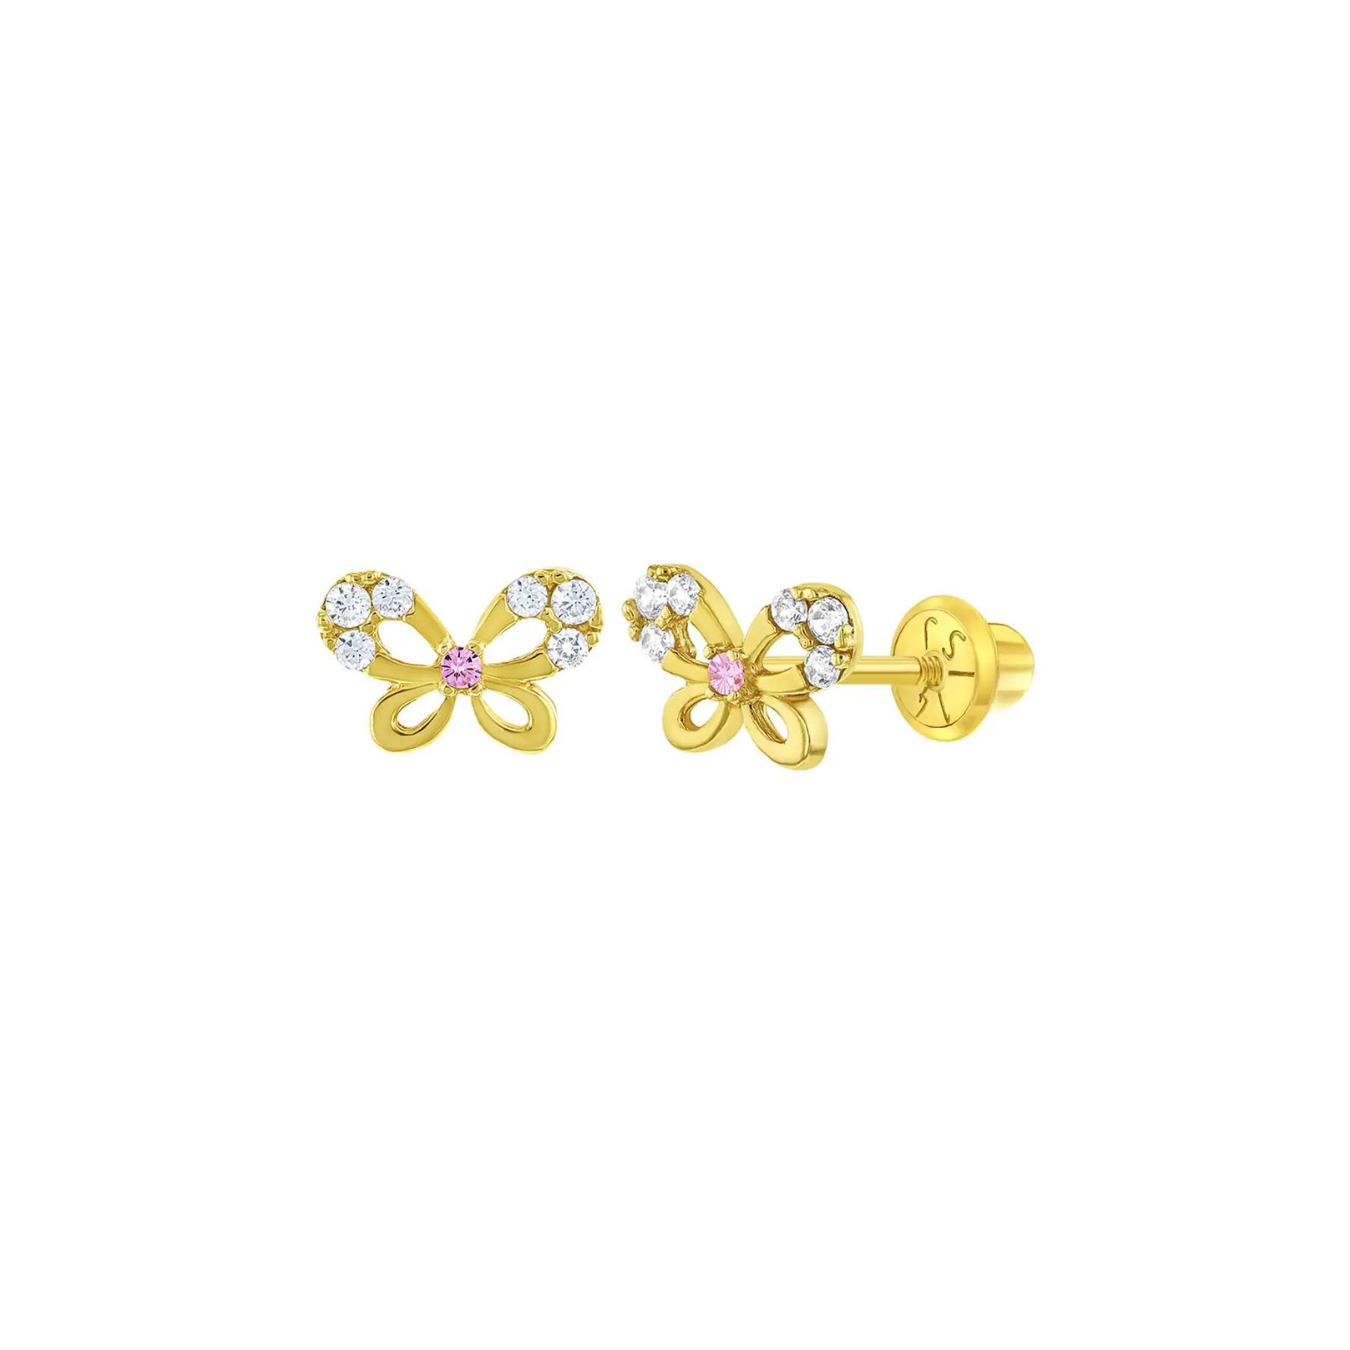 Buy Gold Butterfly Earrings Rose Gold Girls Earrings Sterling Silver  Toddler Earrings Children Jewelry Online in India - Etsy